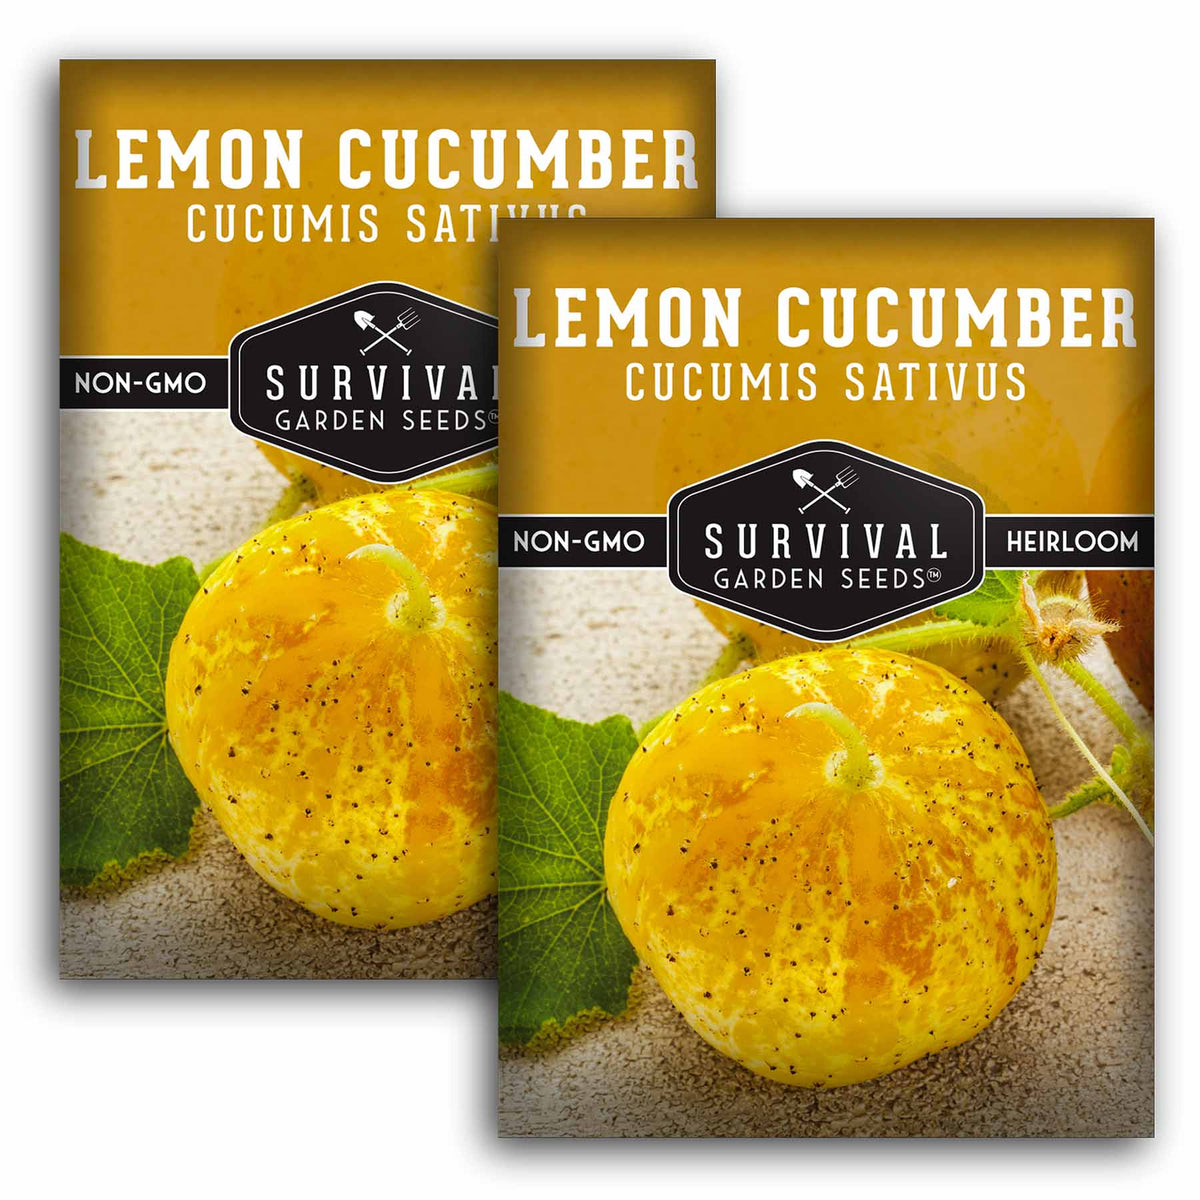 2 packets of Lemon Cucumber seeds